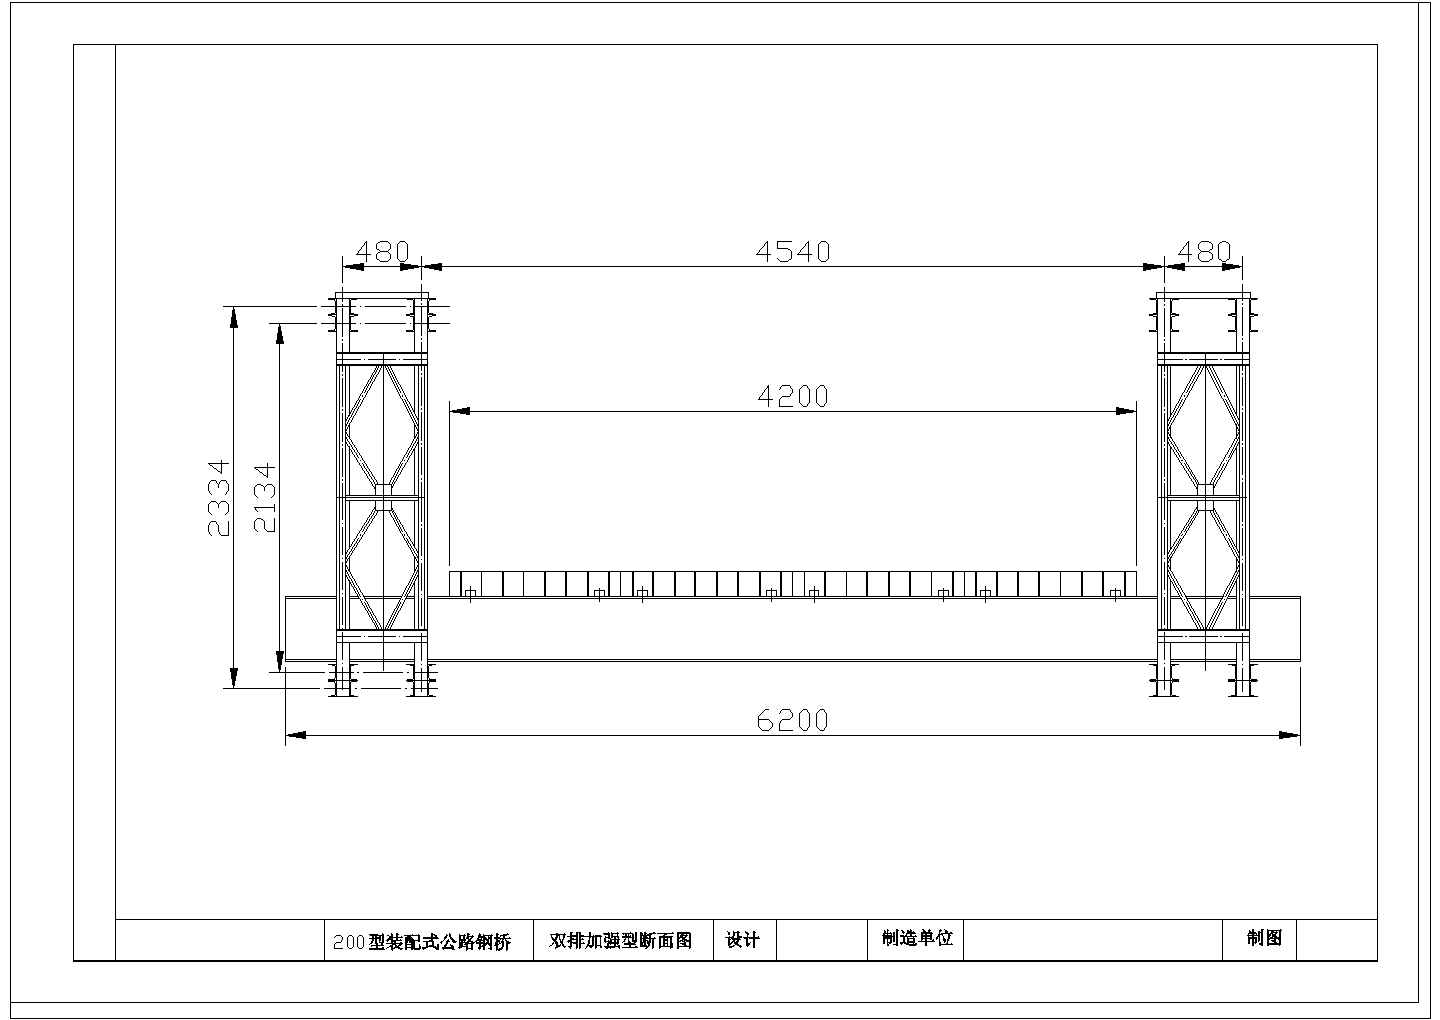 HD200-30m桥梁设计图纸